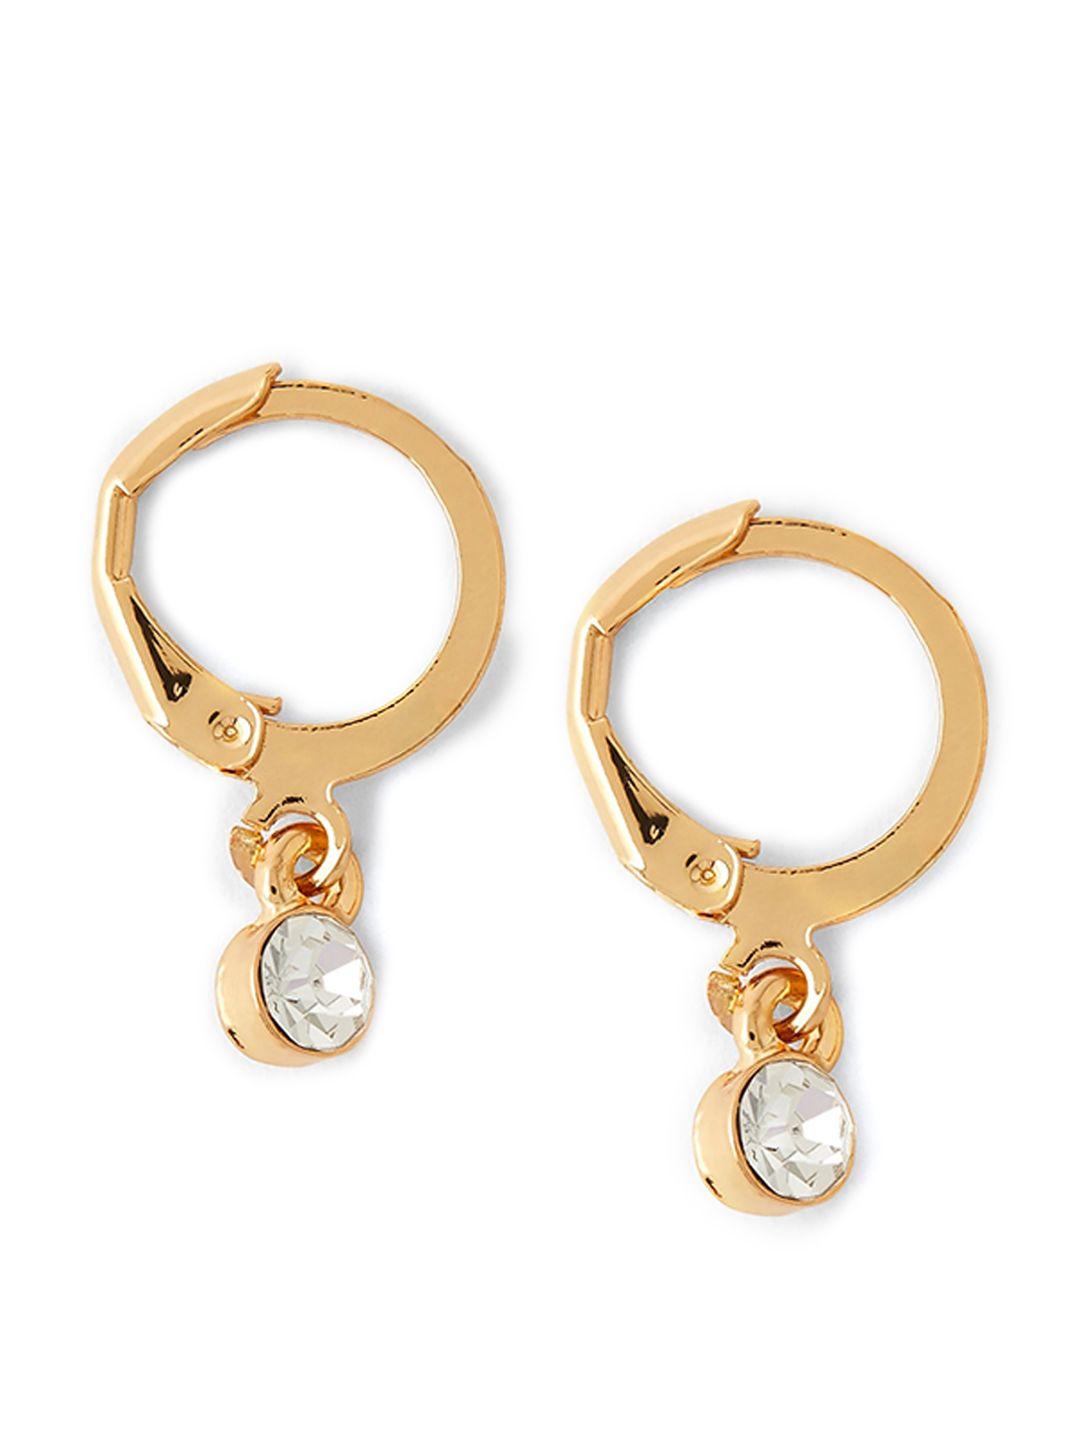 accessorize london transparent contemporary studs earrings